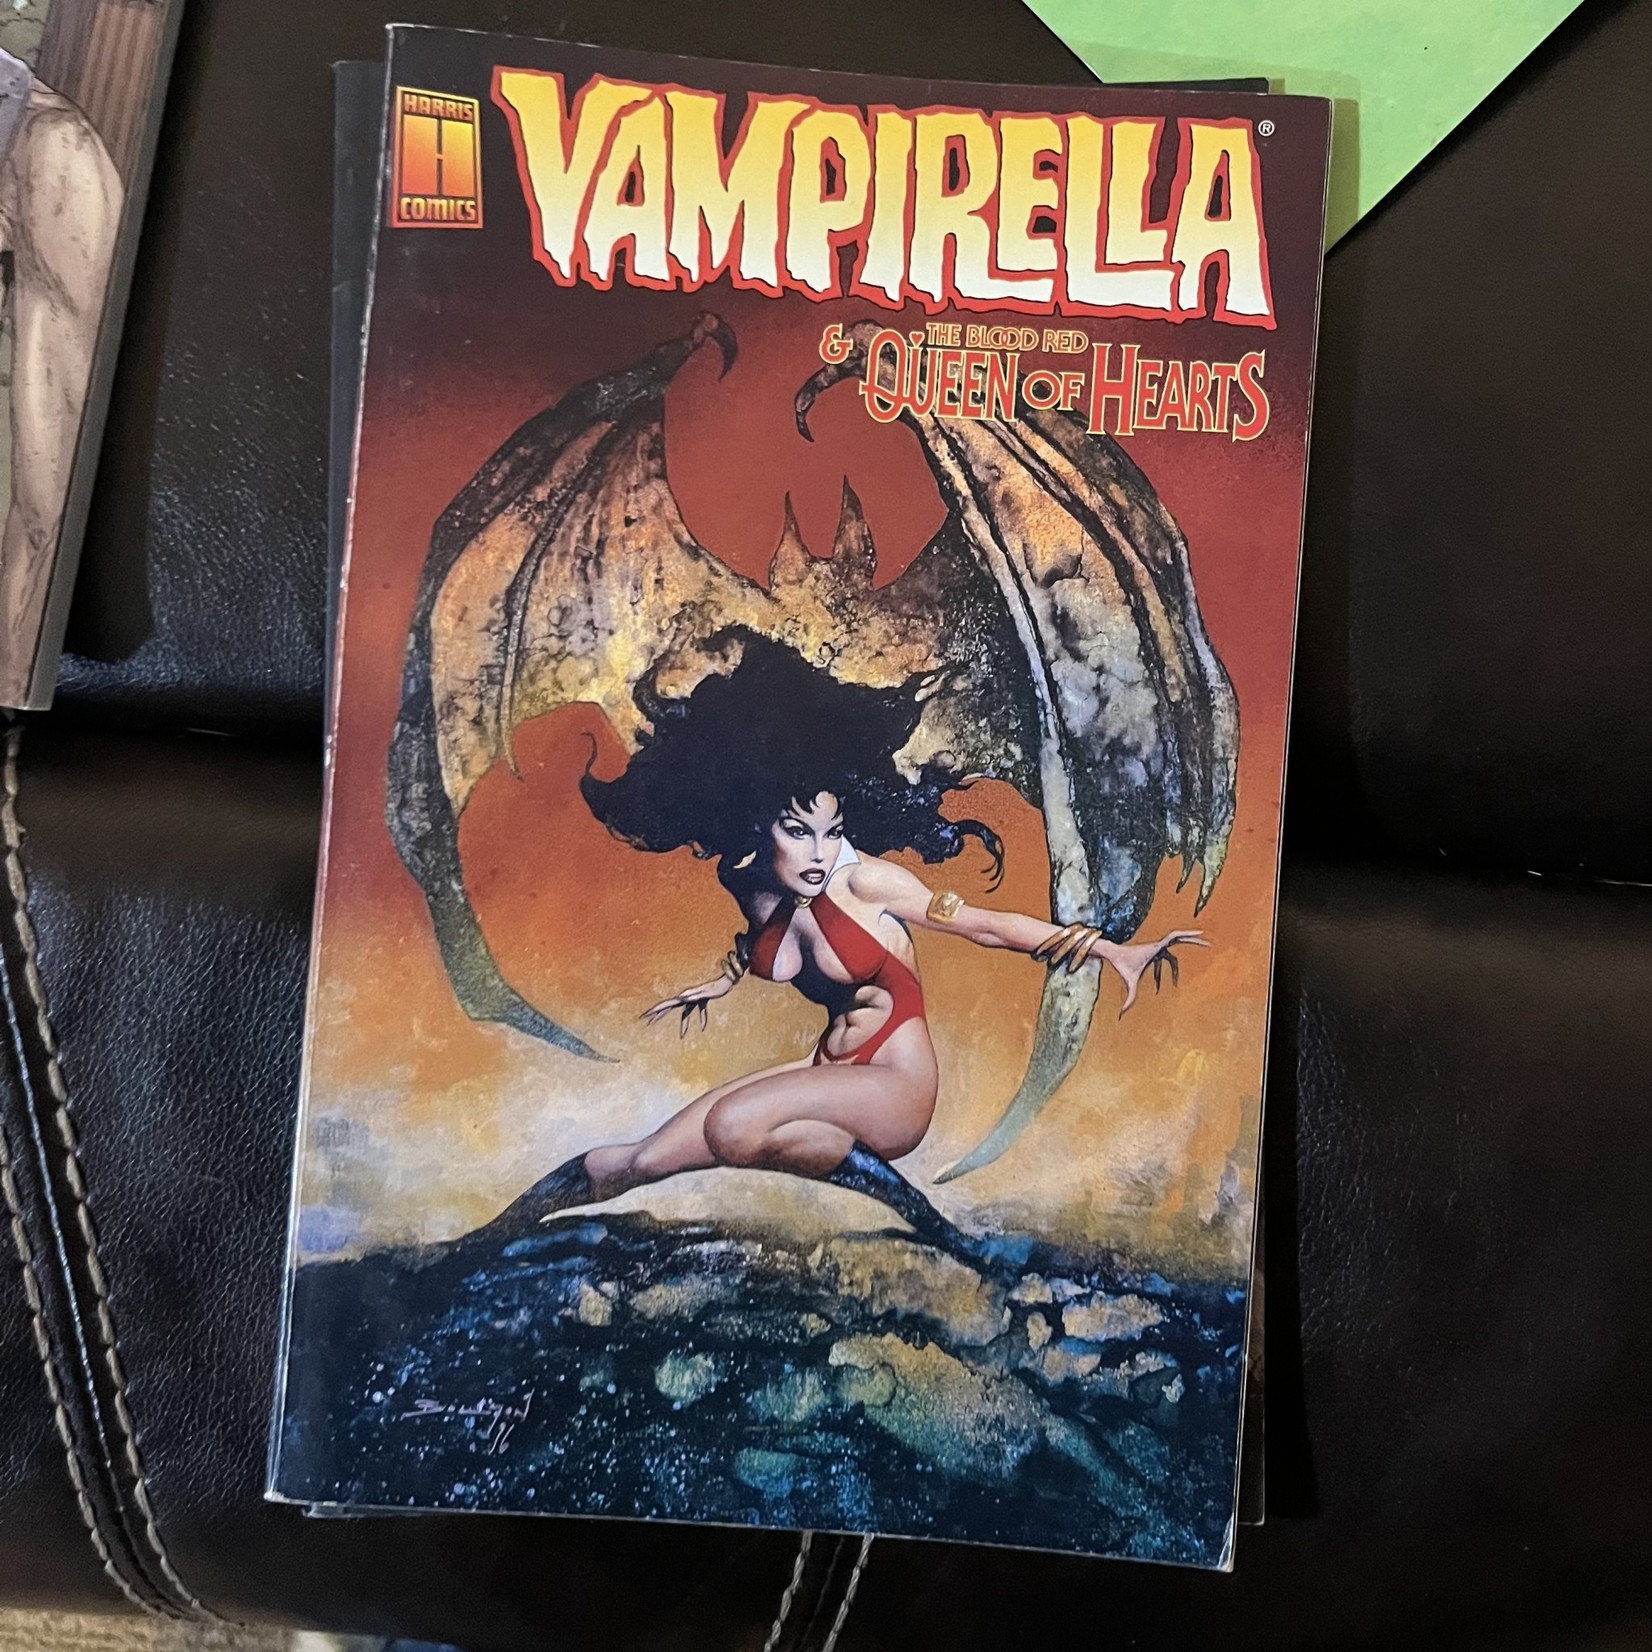 Vampirella Revelations - The Blood Red Queen of Hearts